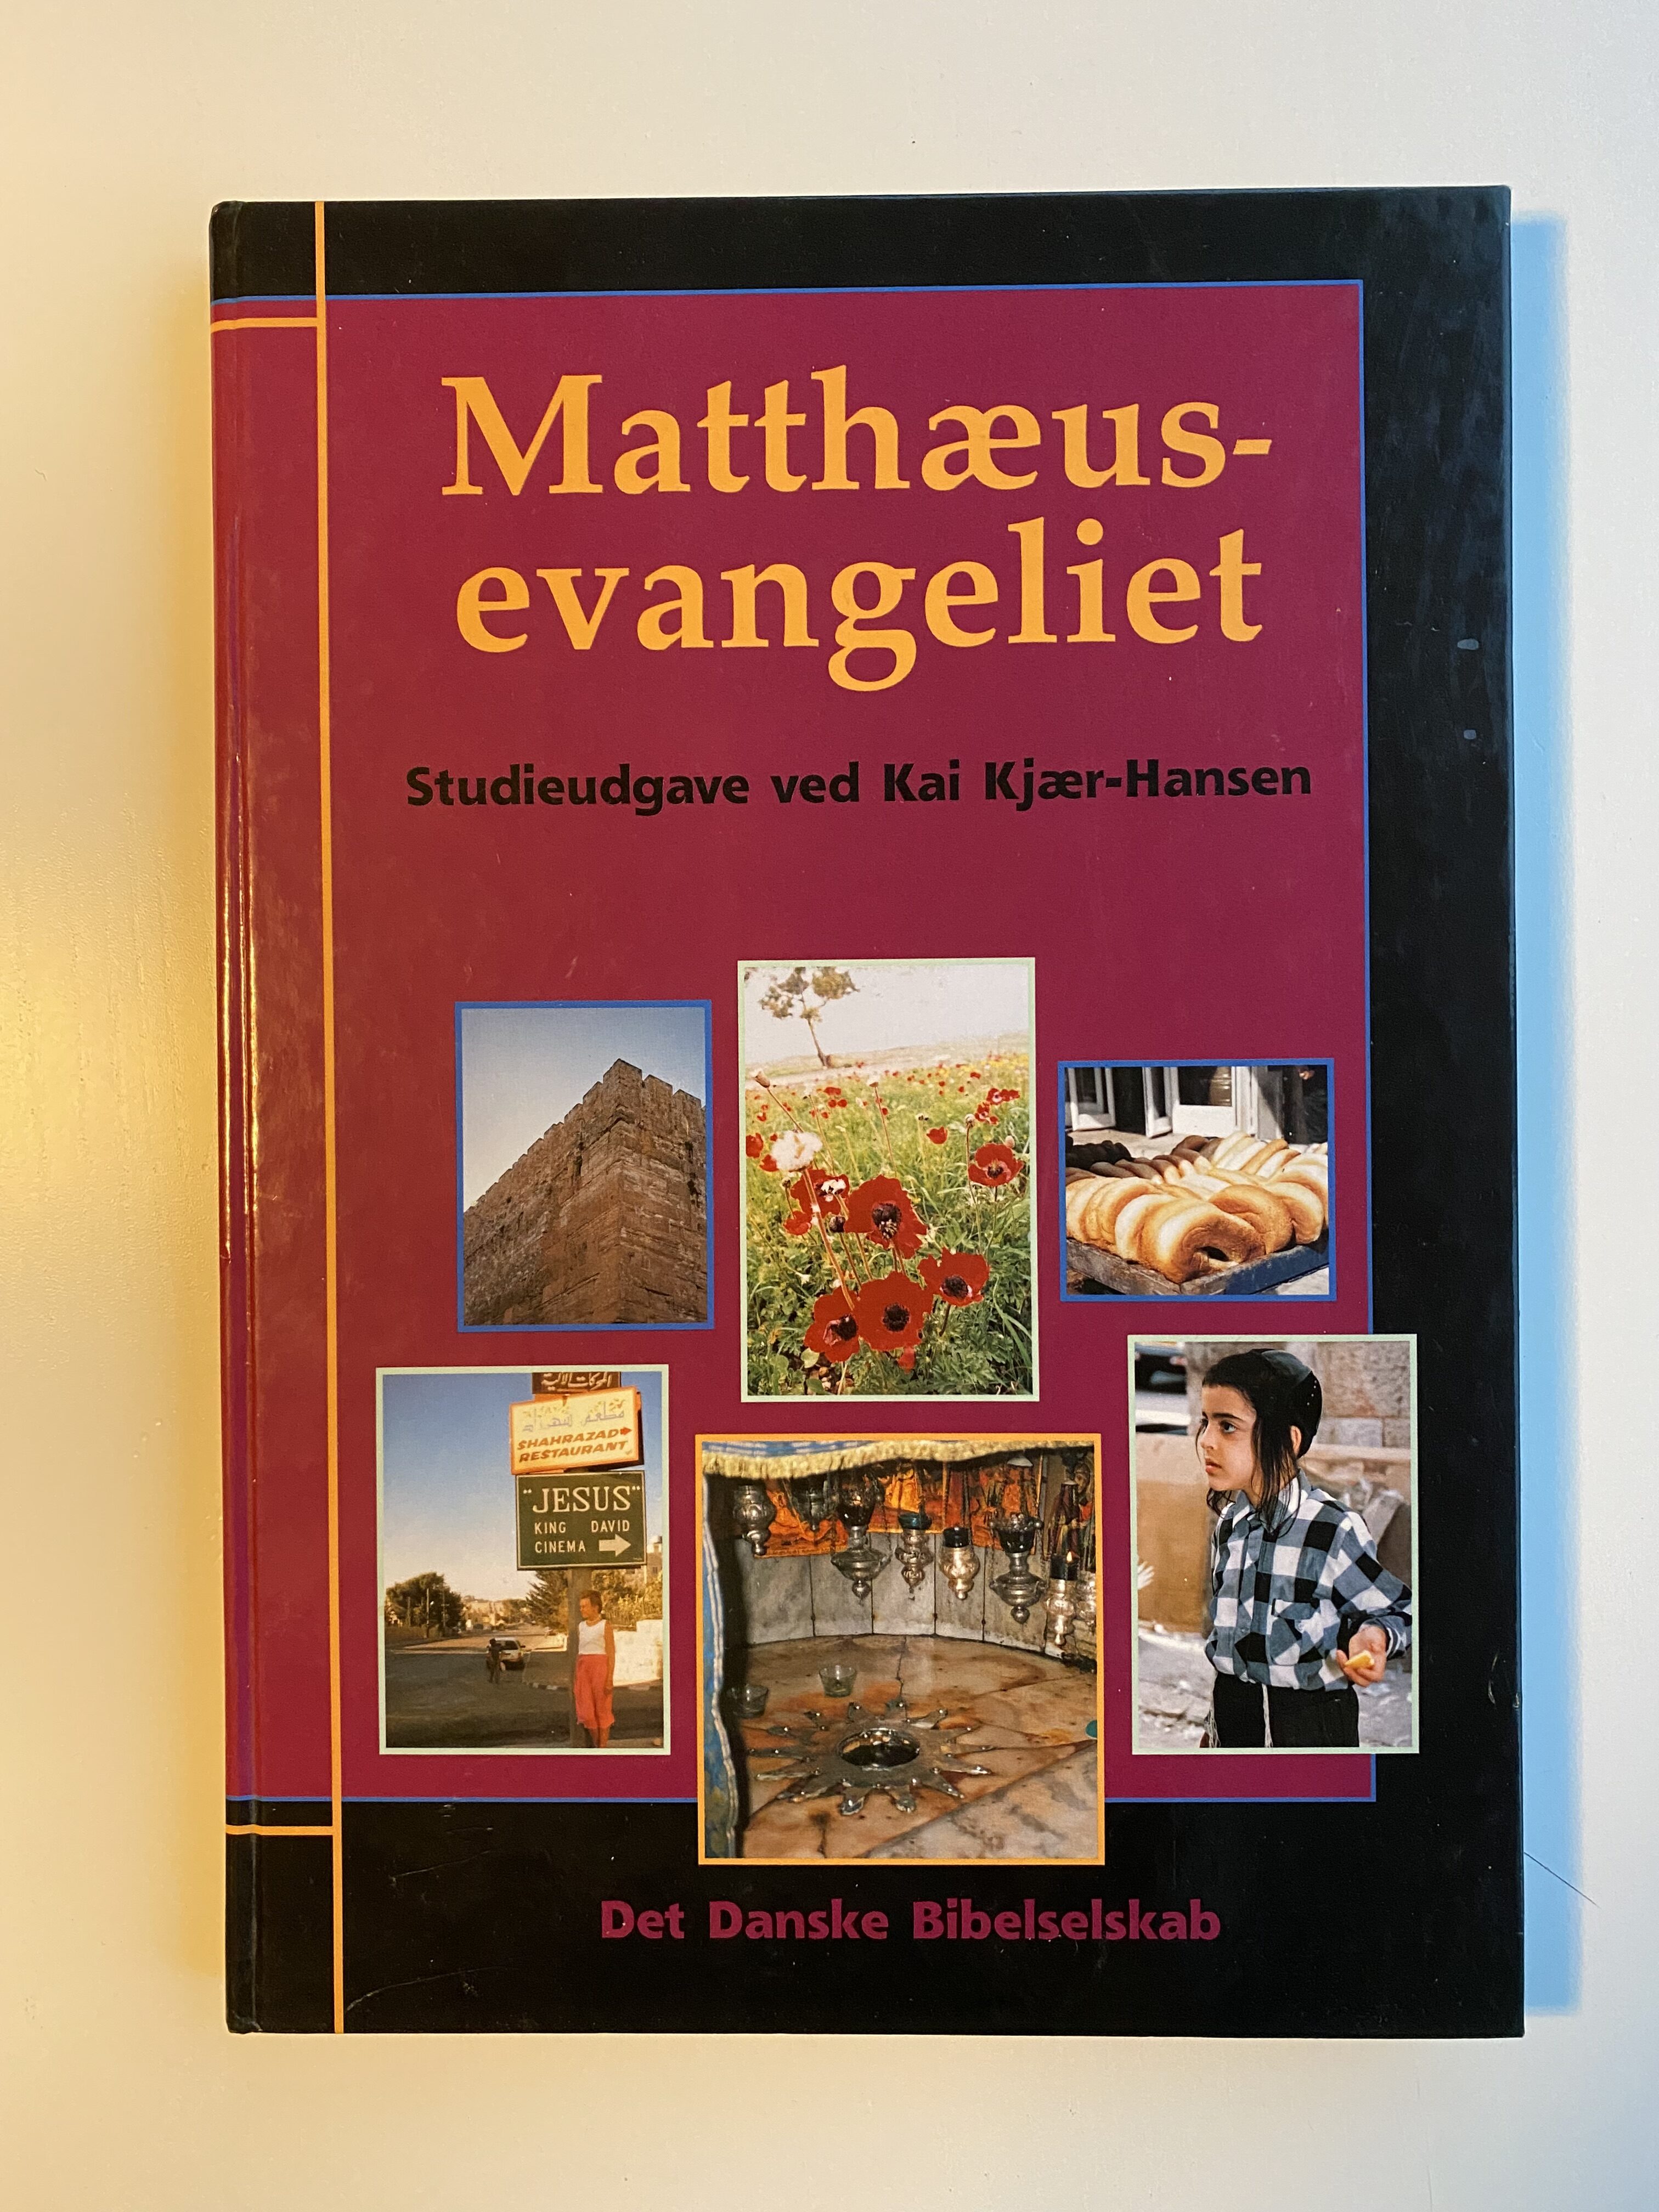 Køb "Matthæusevangeliet 1994" (forside)